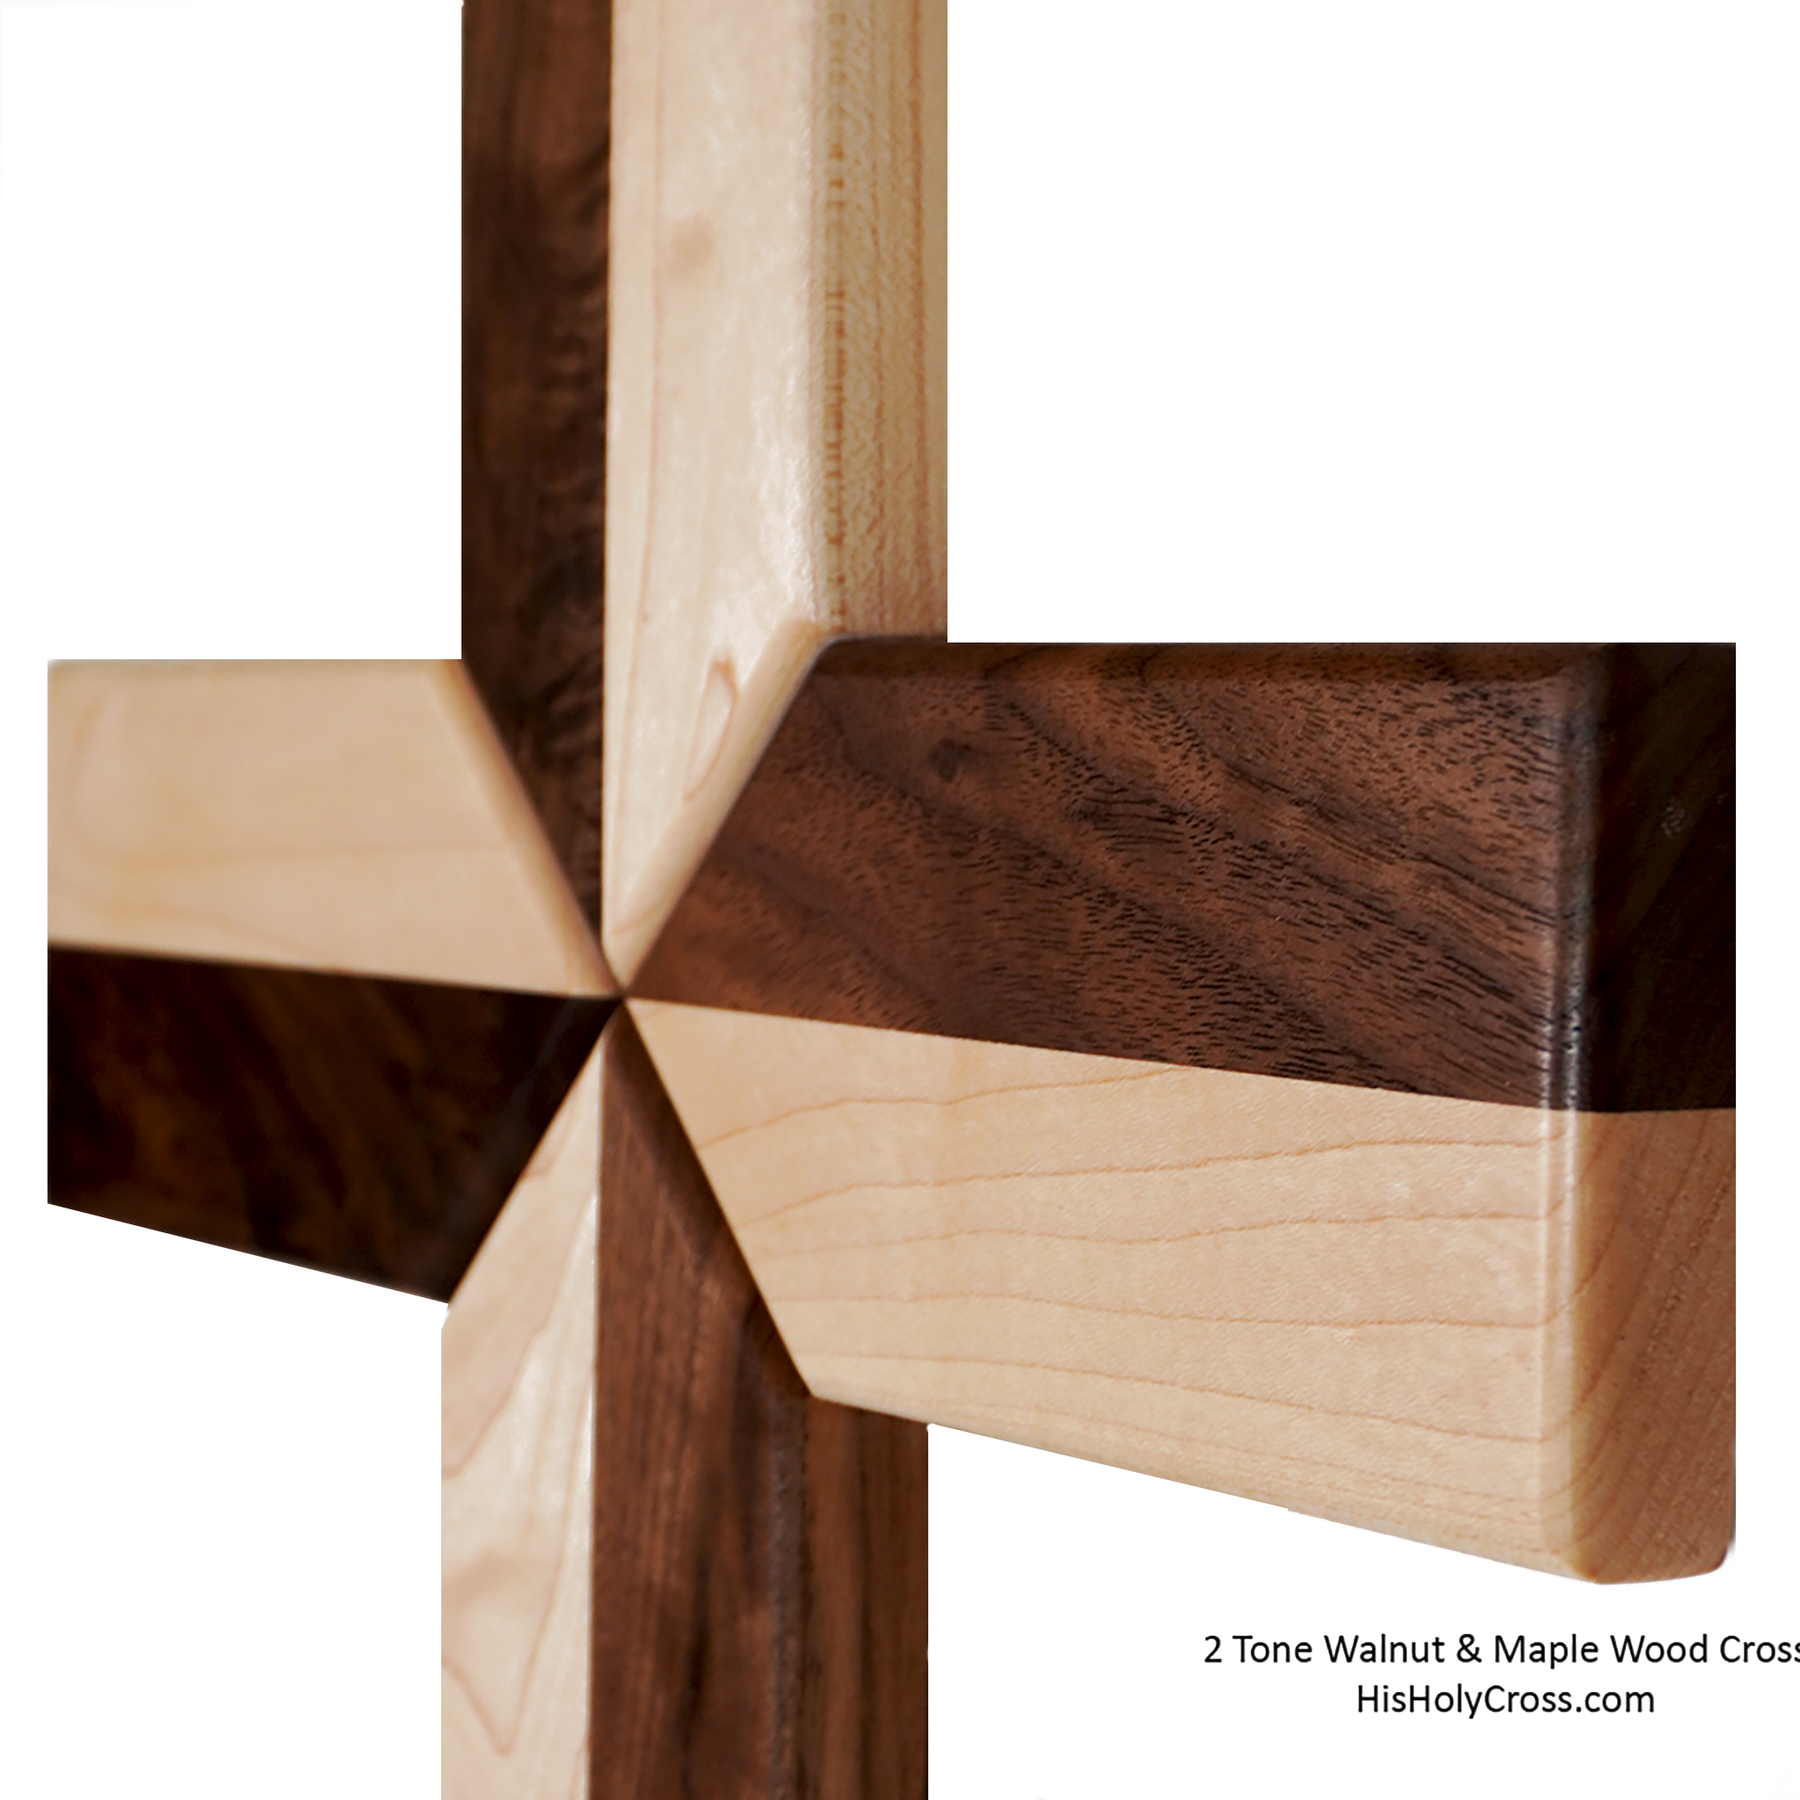 2 Tone Wood Wall Cross - Walnut & Maple